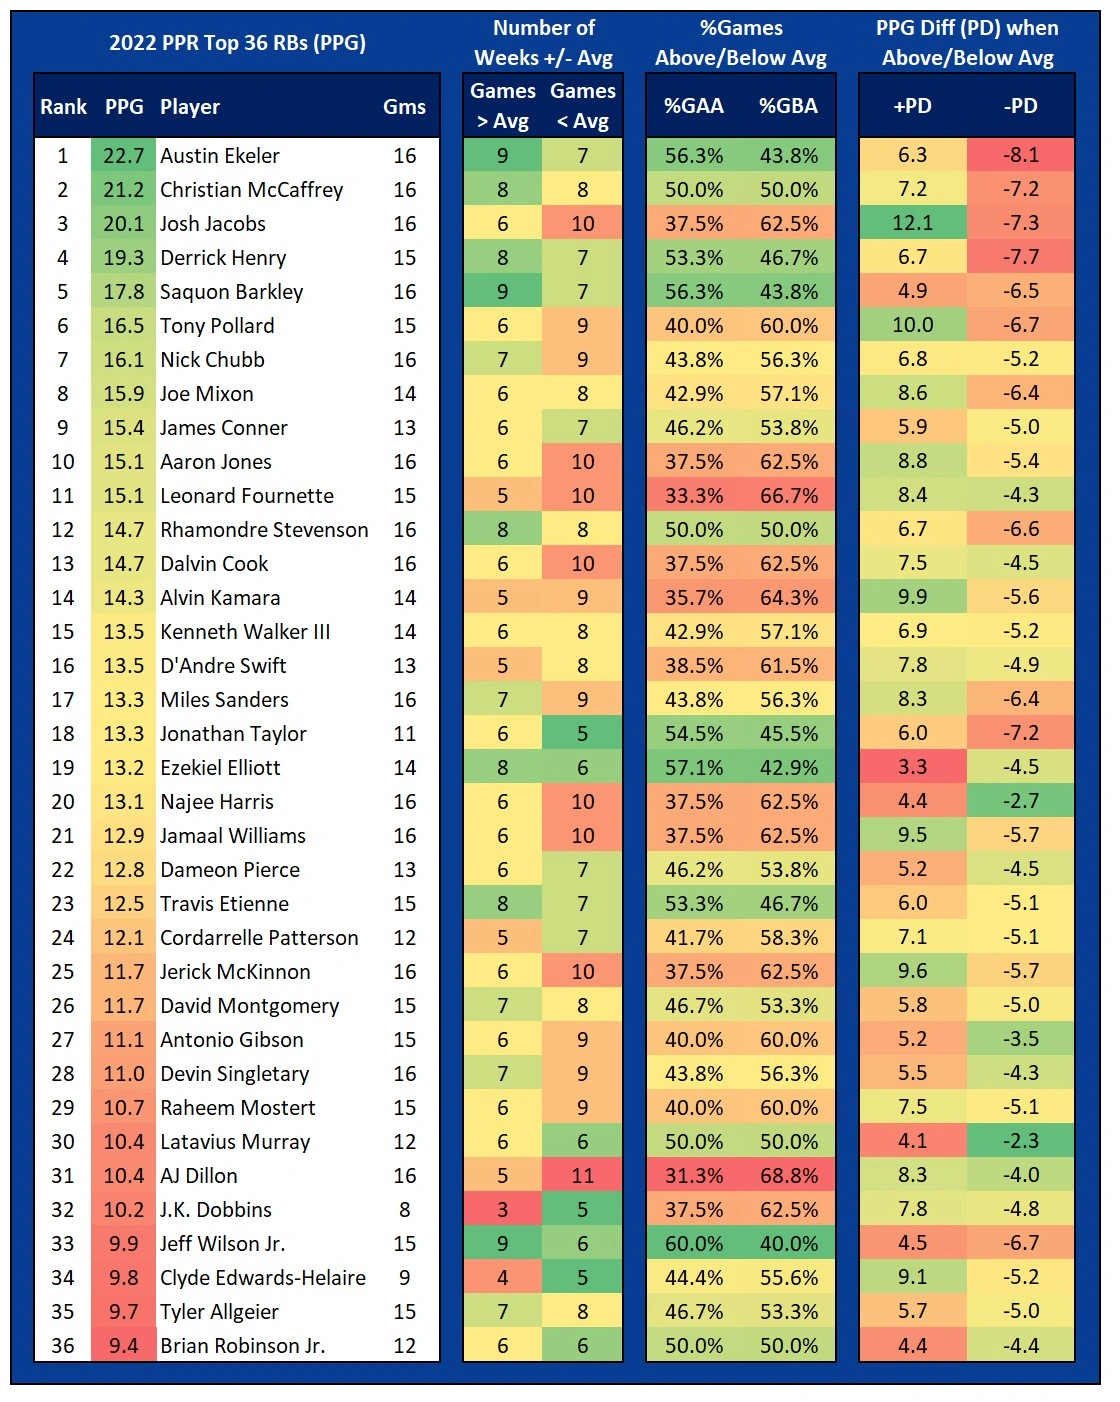 Top 36 RB PPG Summary